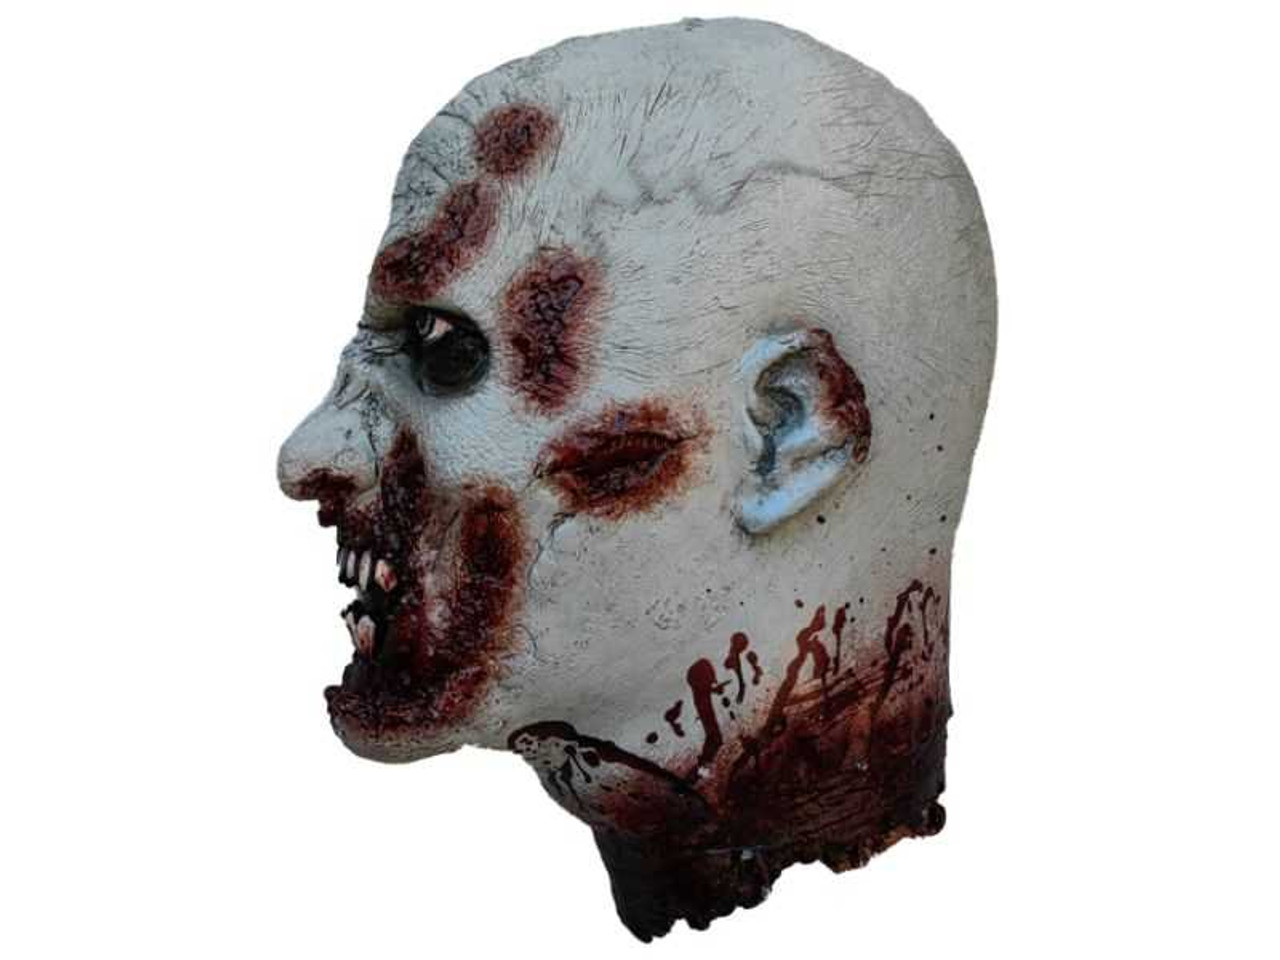 Severed Head Prop Zombie